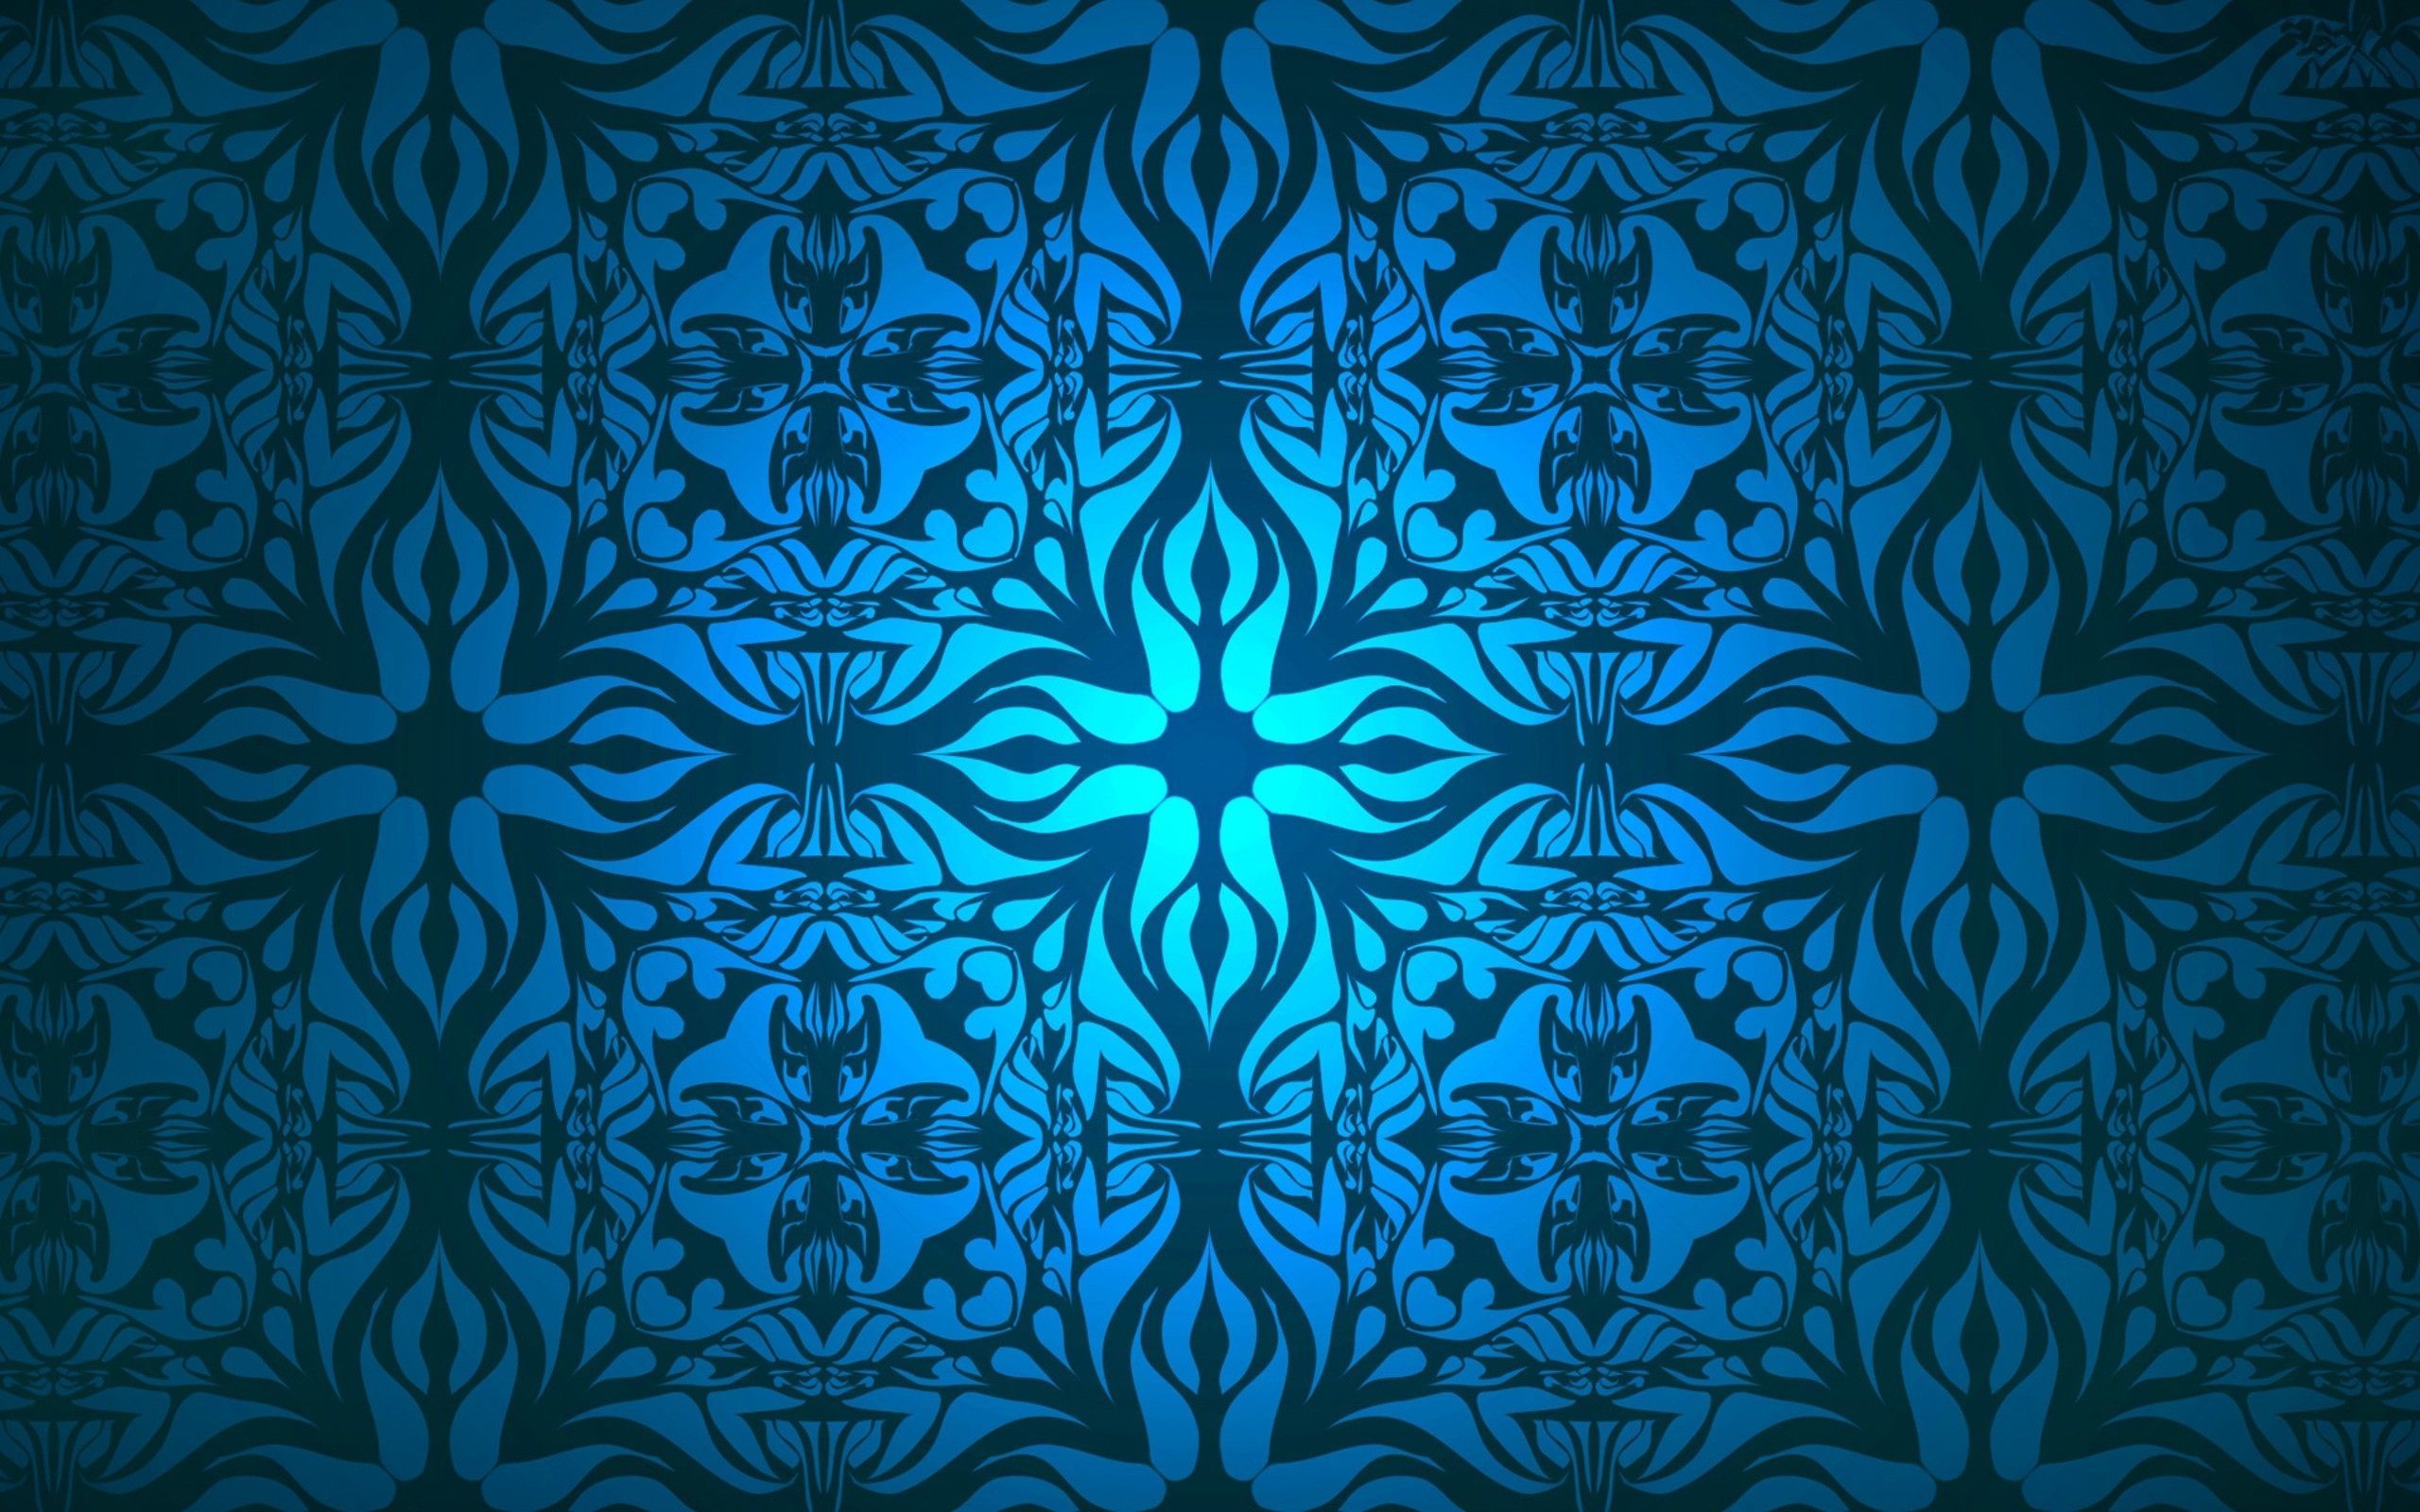 Triangle 8K Blue Pattern Wallpapers